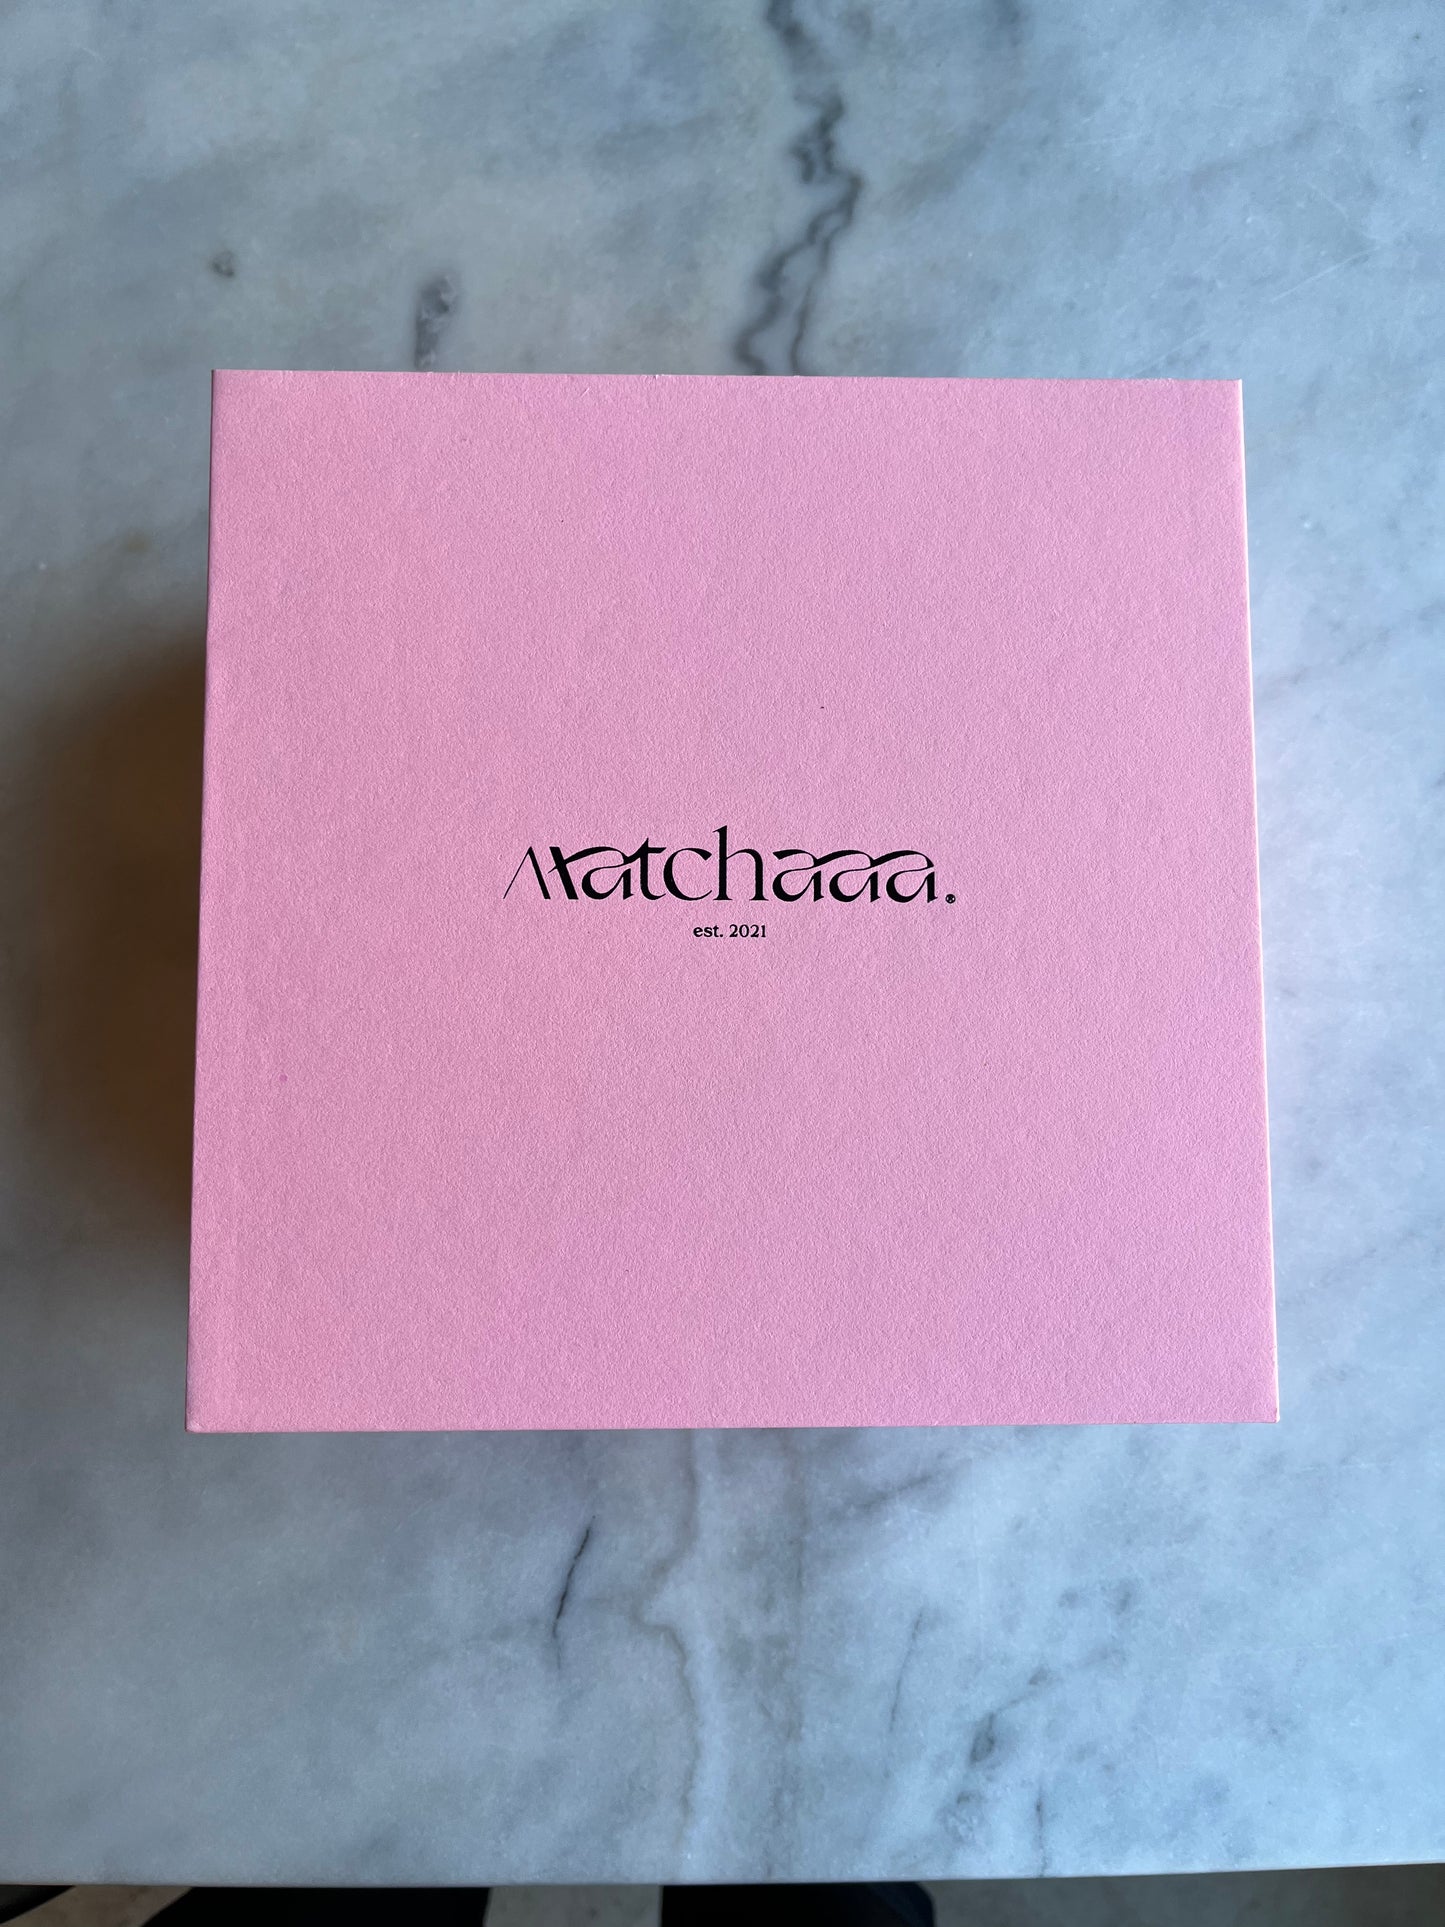 Complete Matcha set gift box pink